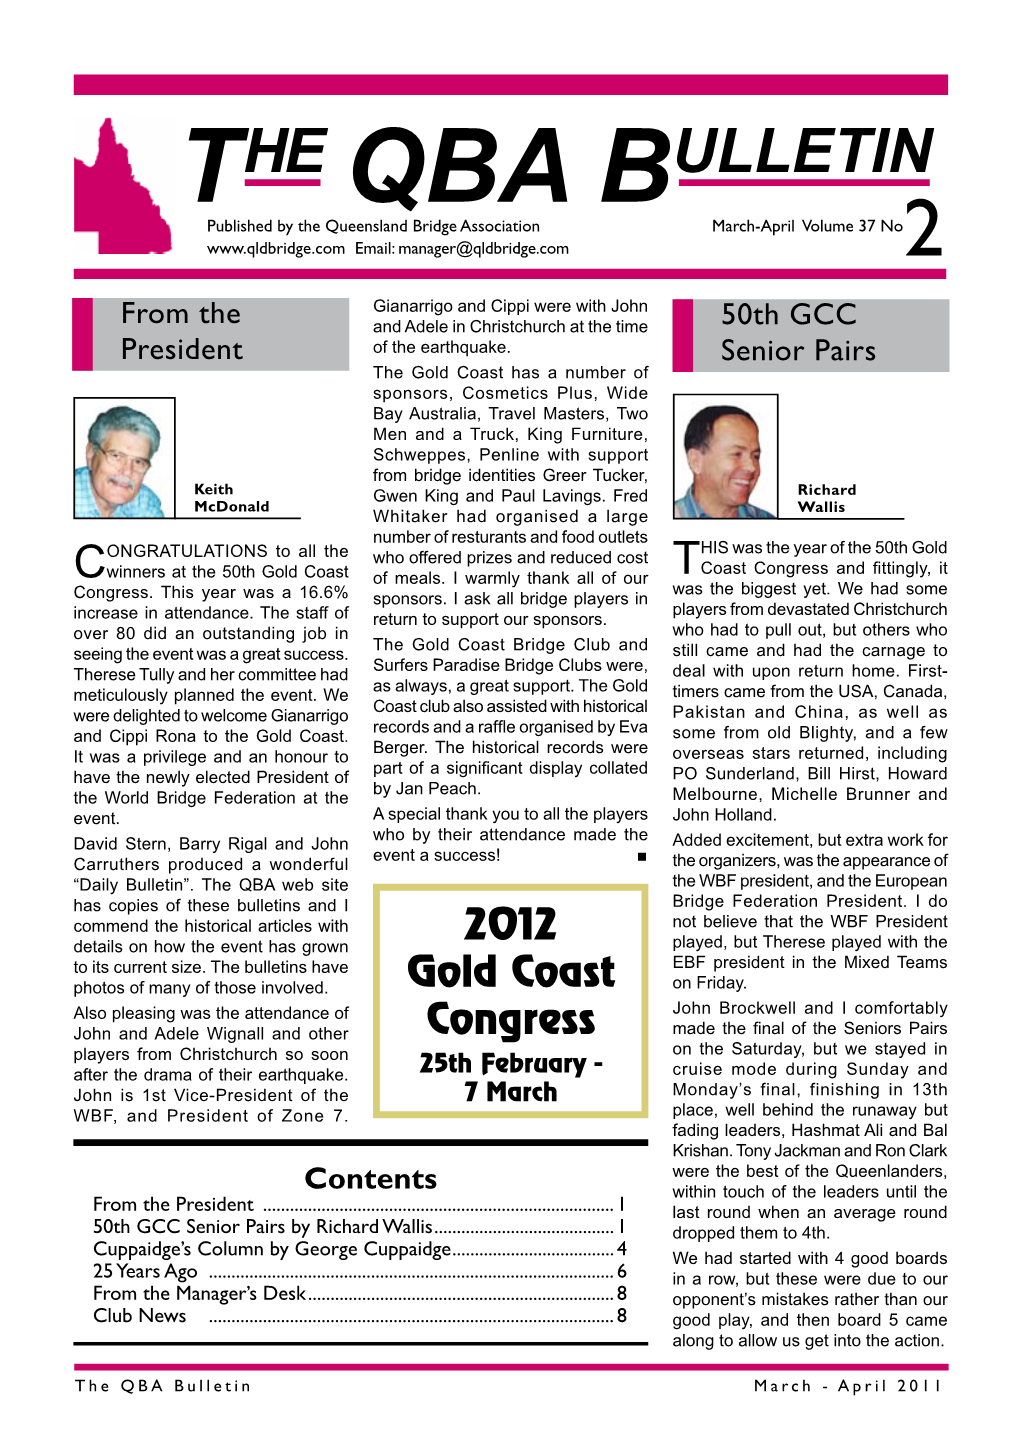 The QBA Bulletin March - April 2011 